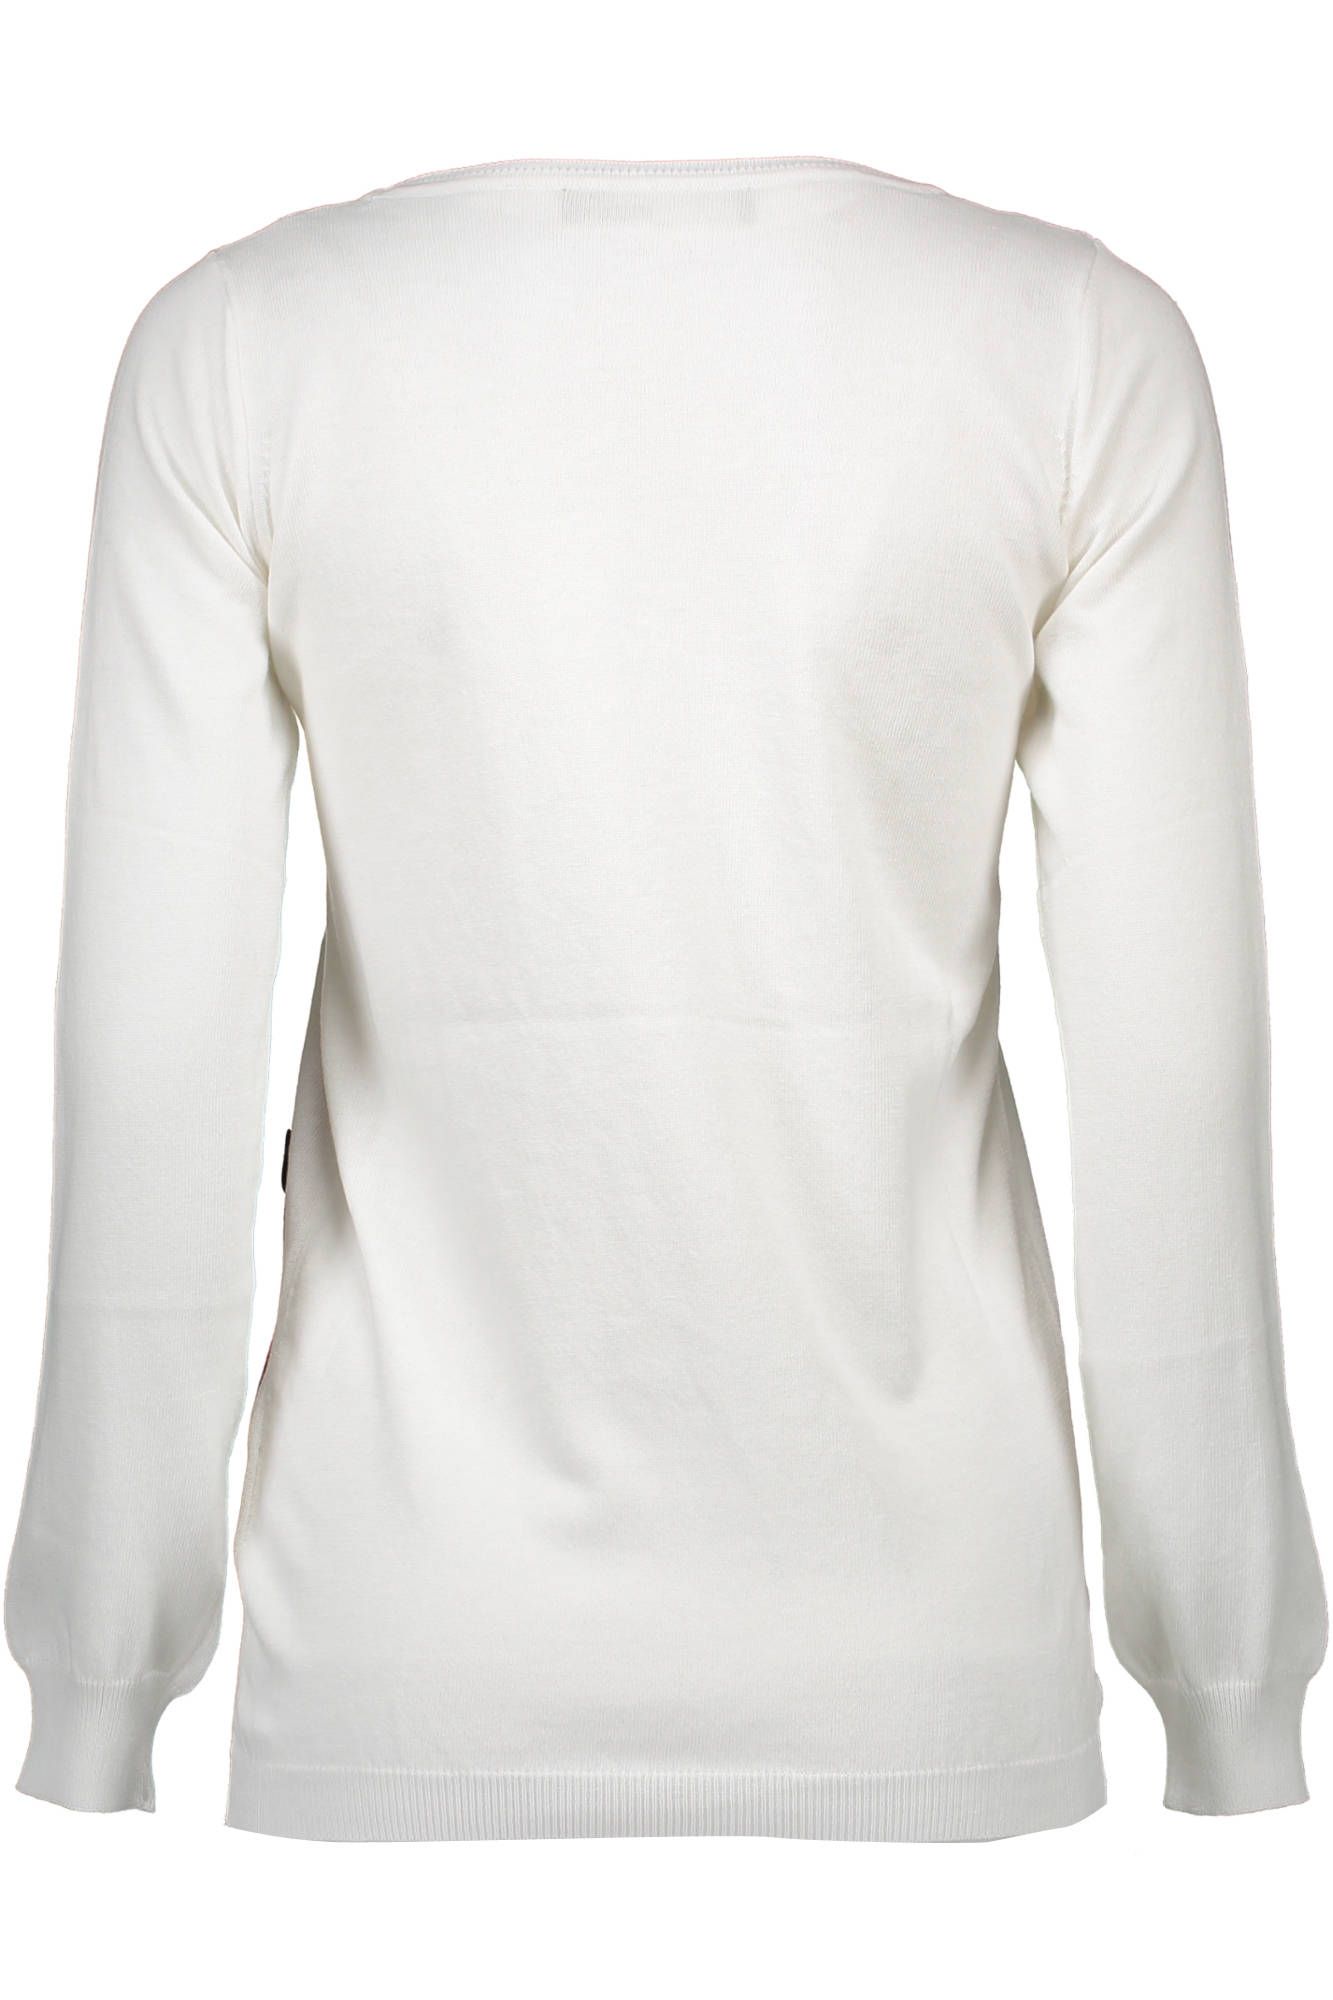 Love Moschino Chic White Sweater with Unique Embellishments